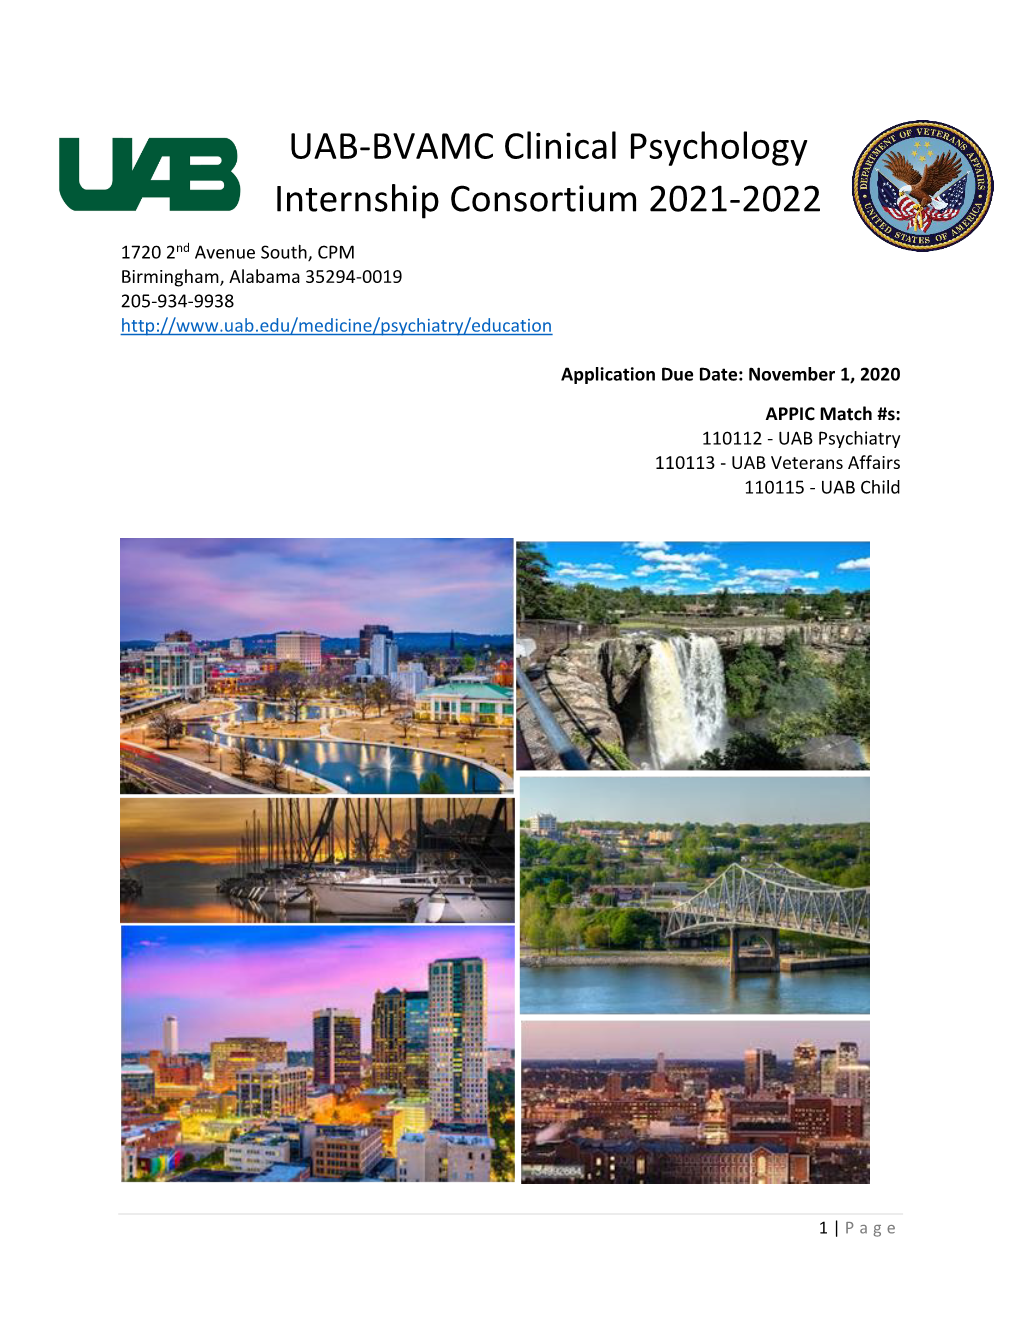 UAB-BVAMC Clinical Psychology Internship Consortium 2021-2022